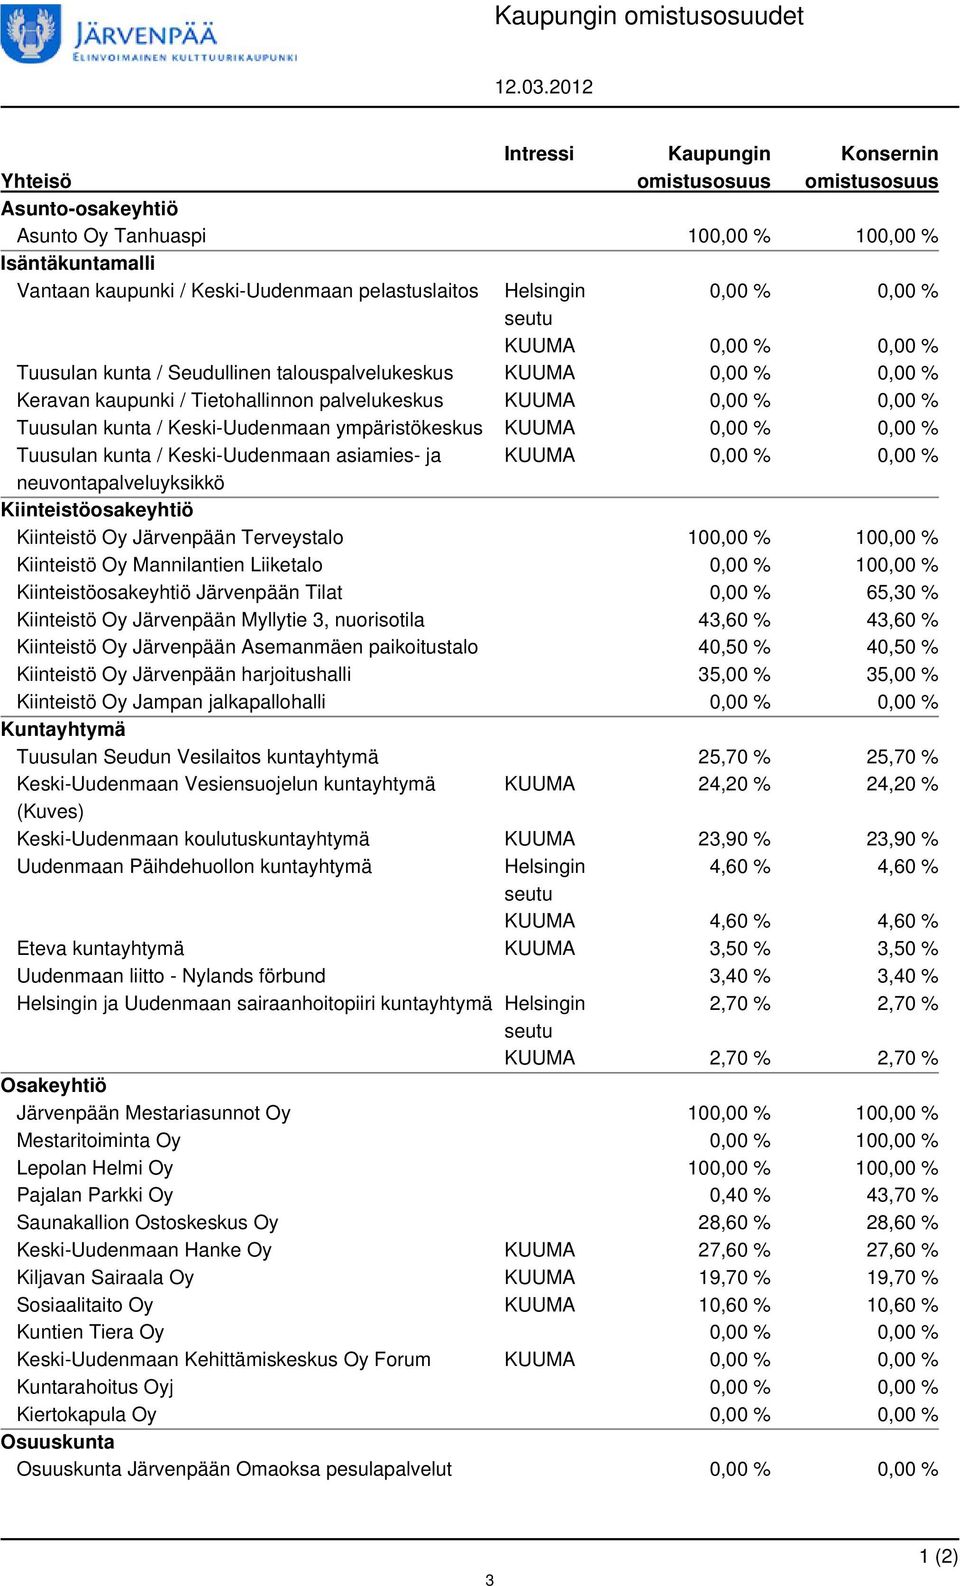 Helsingin 0,00 % 0,00 % seutu KUUMA 0,00 % 0,00 % Tuusulan kunta / Seudullinen talouspalvelukeskus KUUMA 0,00 % 0,00 % Keravan kaupunki / Tietohallinnon palvelukeskus KUUMA 0,00 % 0,00 % Tuusulan